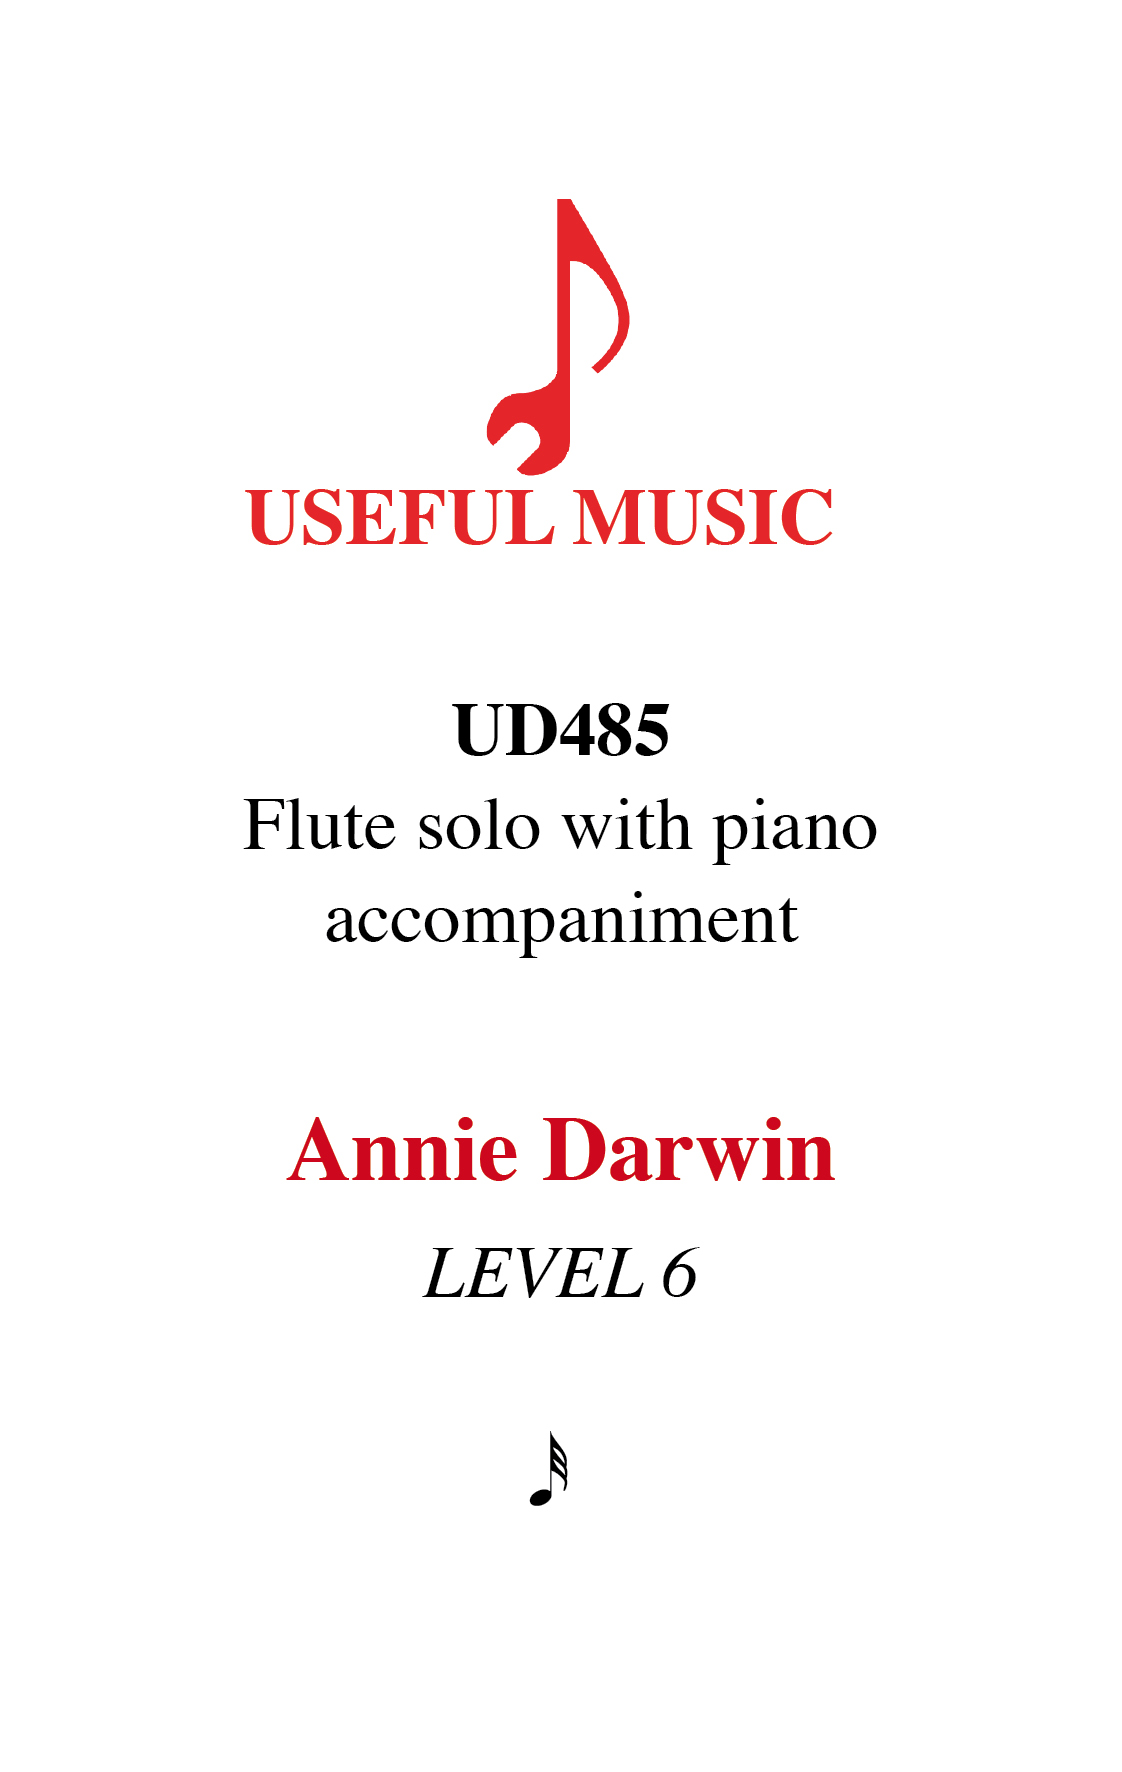 Annie Darwin - flute with piano accompaniment